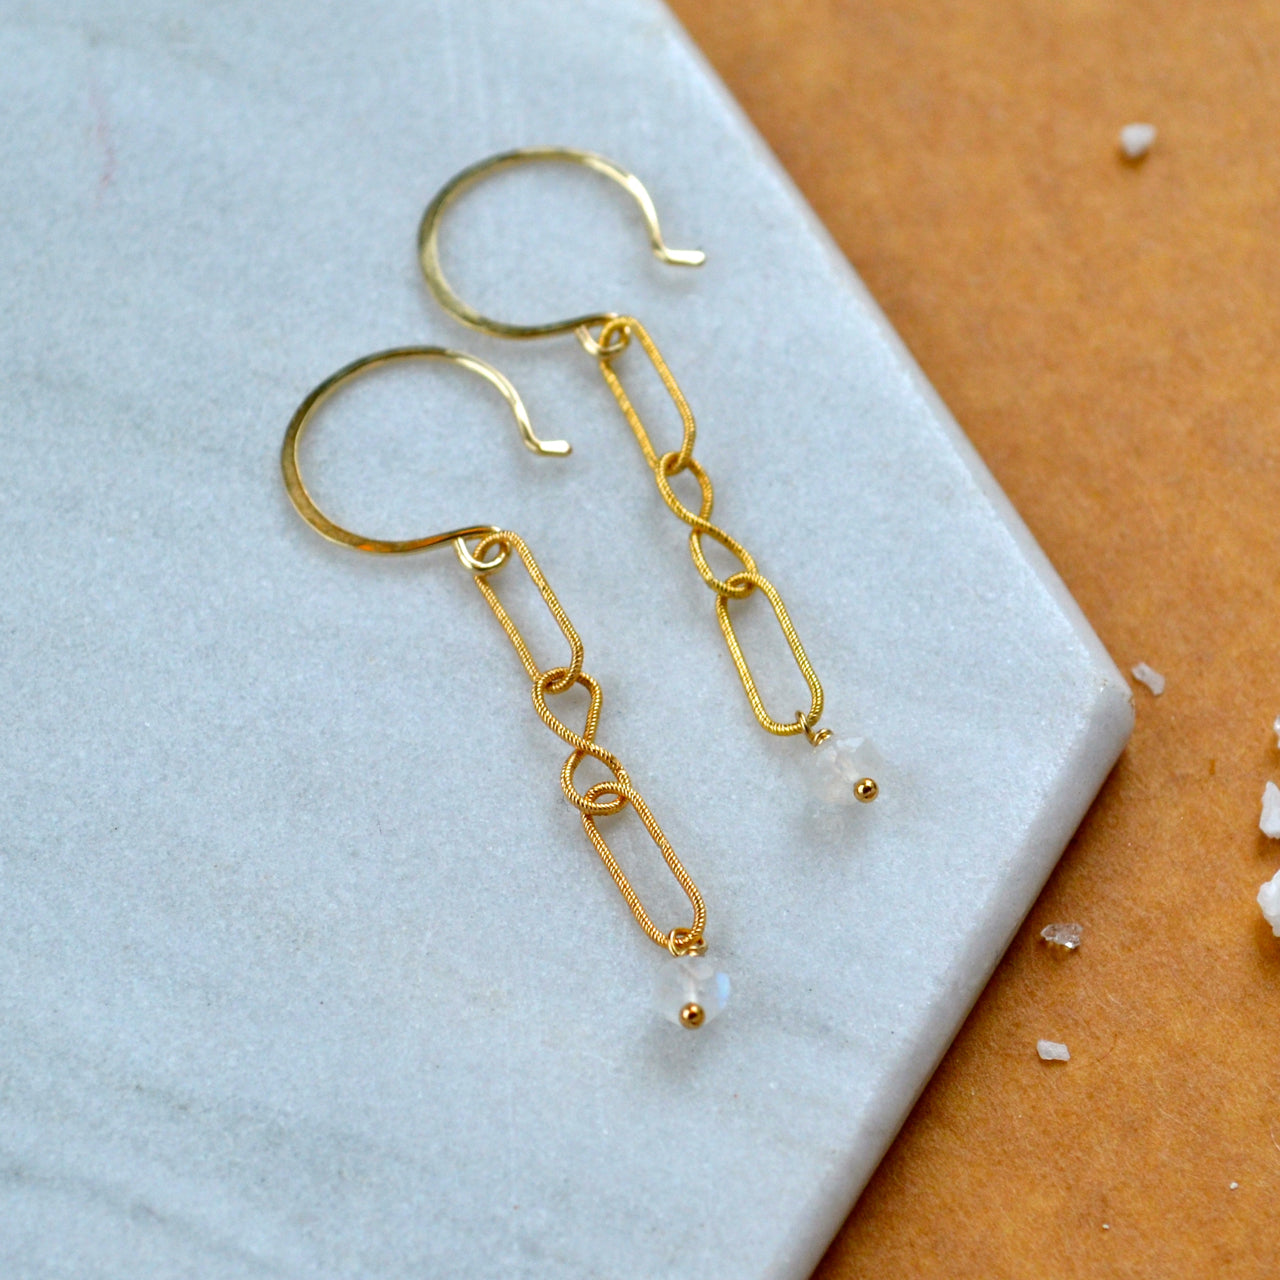 lightkeeper earrings moonstone chain dangle earring handmade jewelry delicate gold